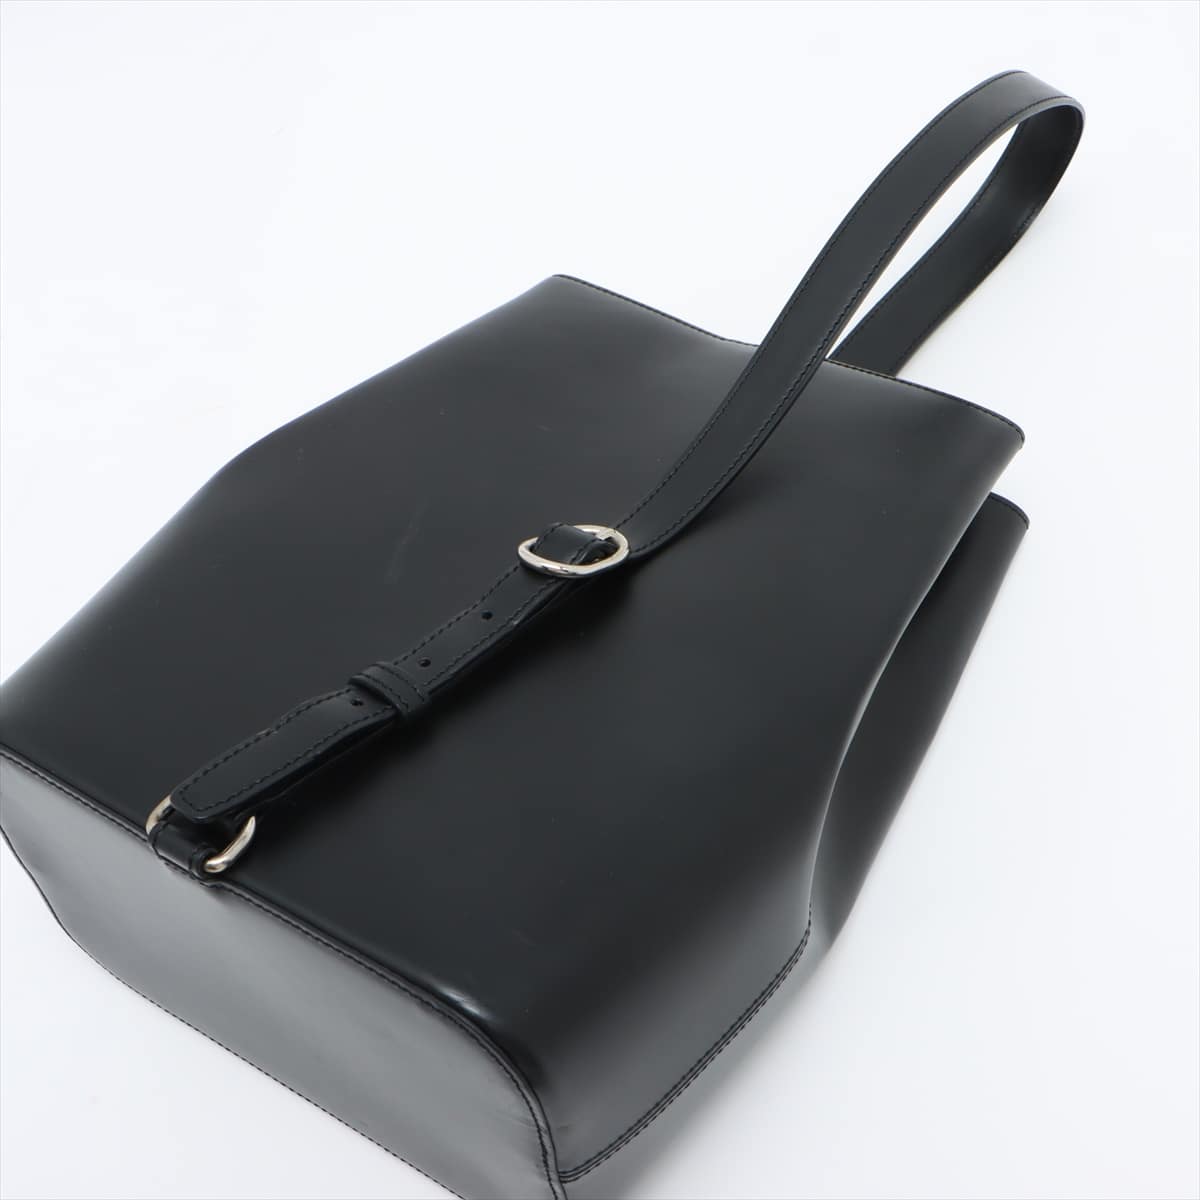 Cartier Panthère Leather One shoulder bag Black